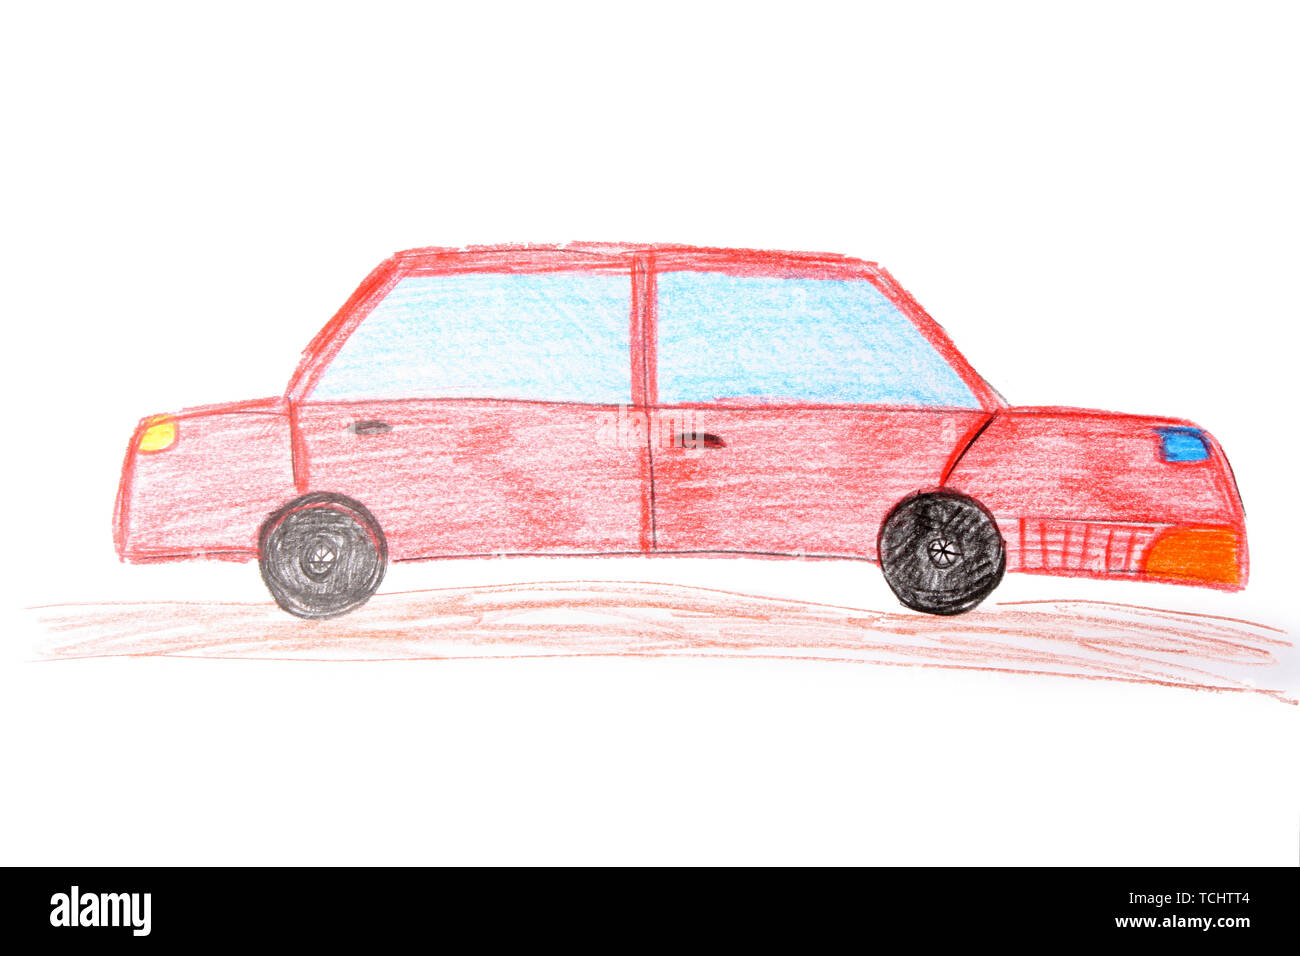 How to draw and color a Ferrari car | Ferrari car, Art for kids, Ferrari